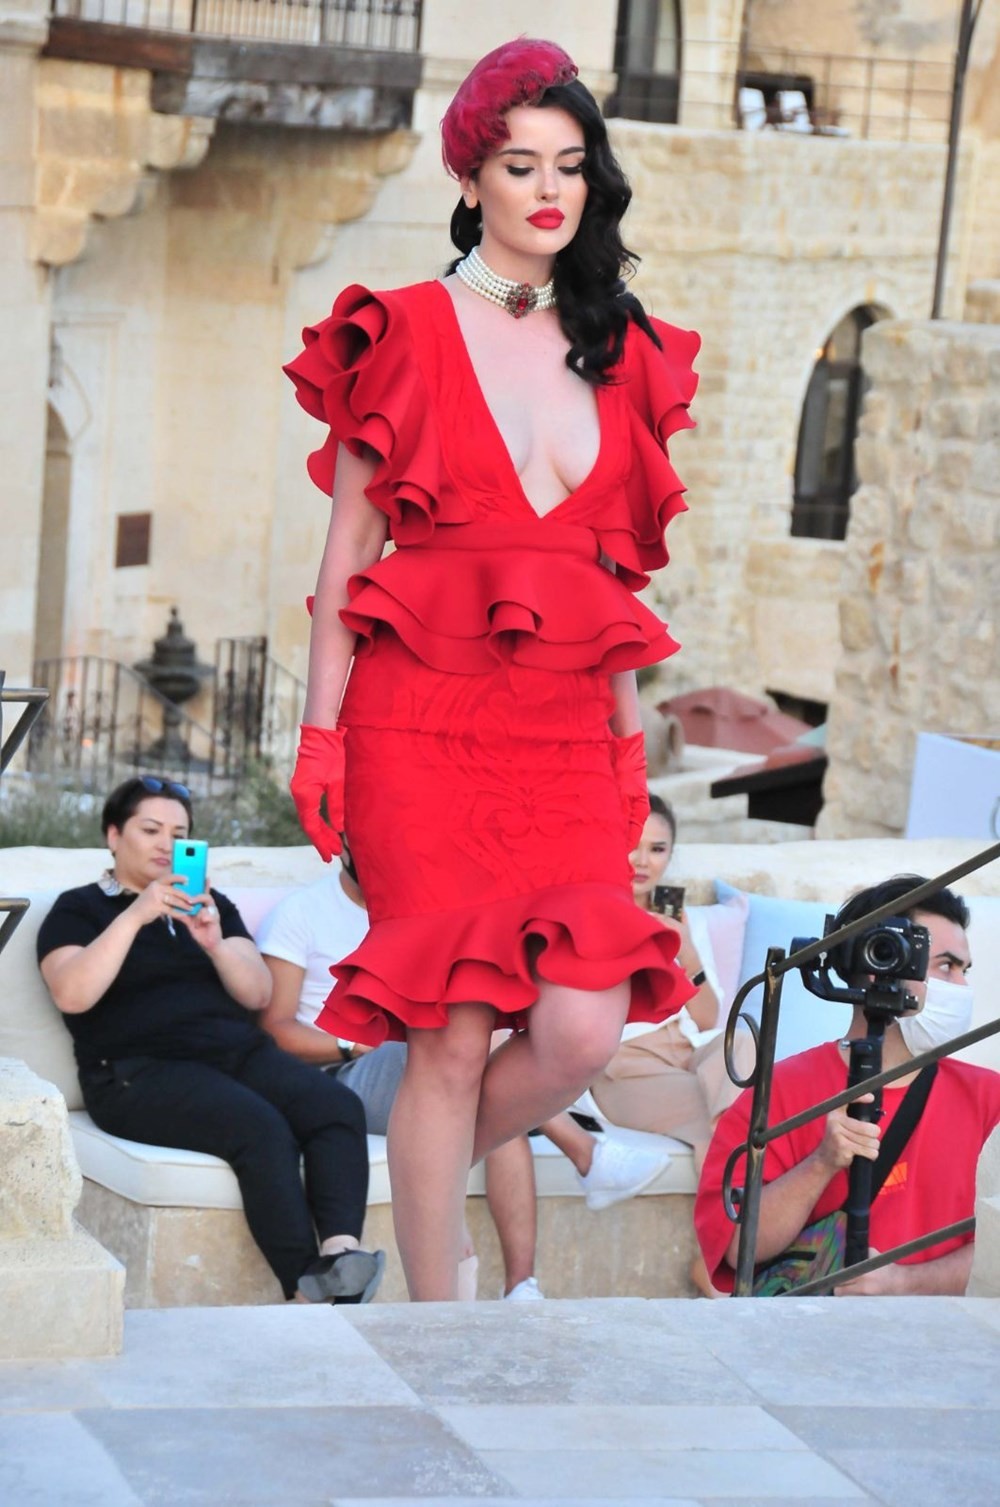 Kapadokya Fashion Week'de mankenler podyumda boy gösterdi